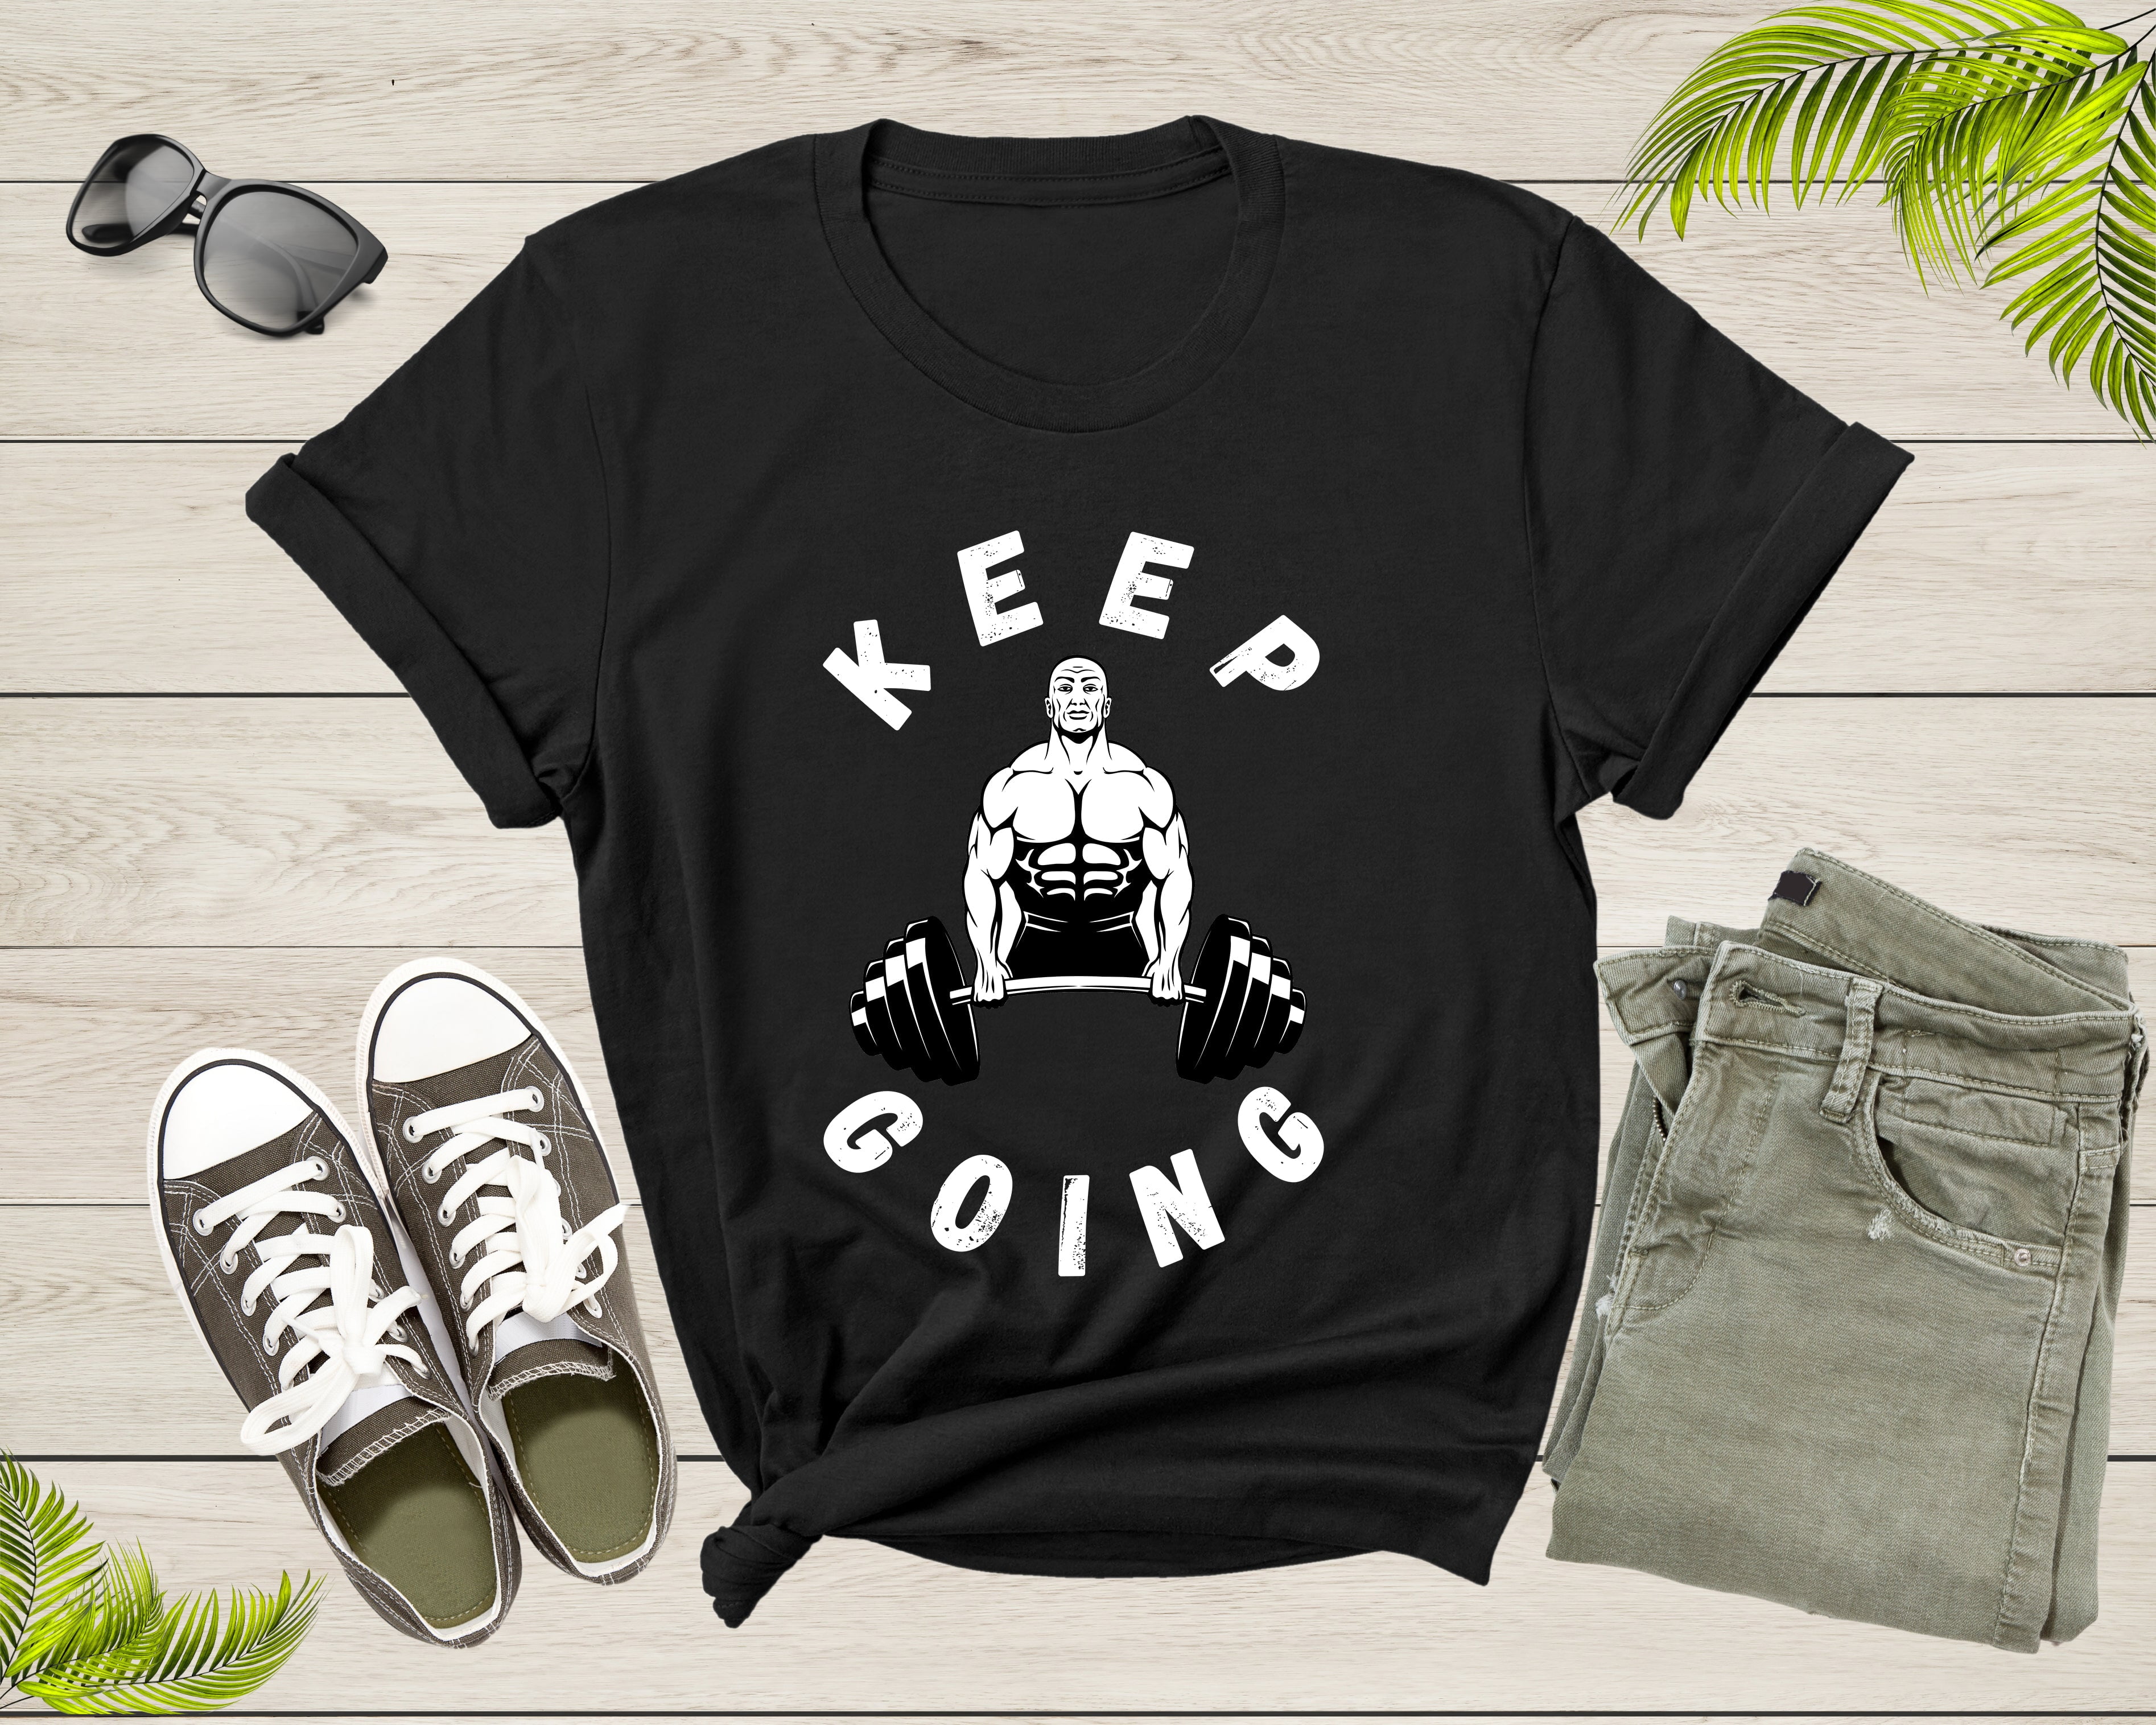 Keep Going Cool Motivational Quote Meme Weightlifter Power T-Shirt GYM  Lover Gift T Shirt for Men Women Kids Boys Girls Teens Tshirt